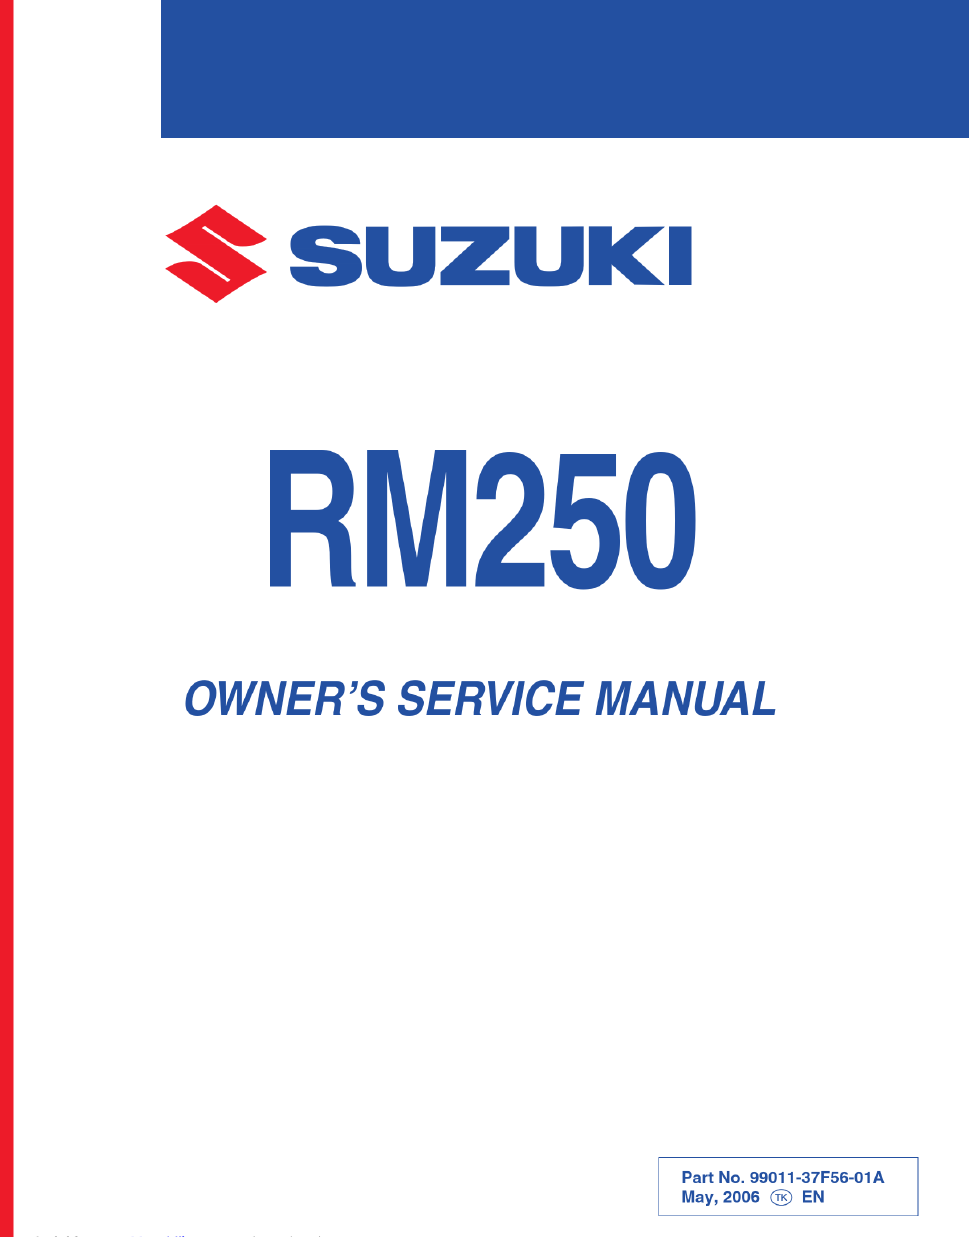 Suzuki Dr650 Owners Manual Pdf Free Download